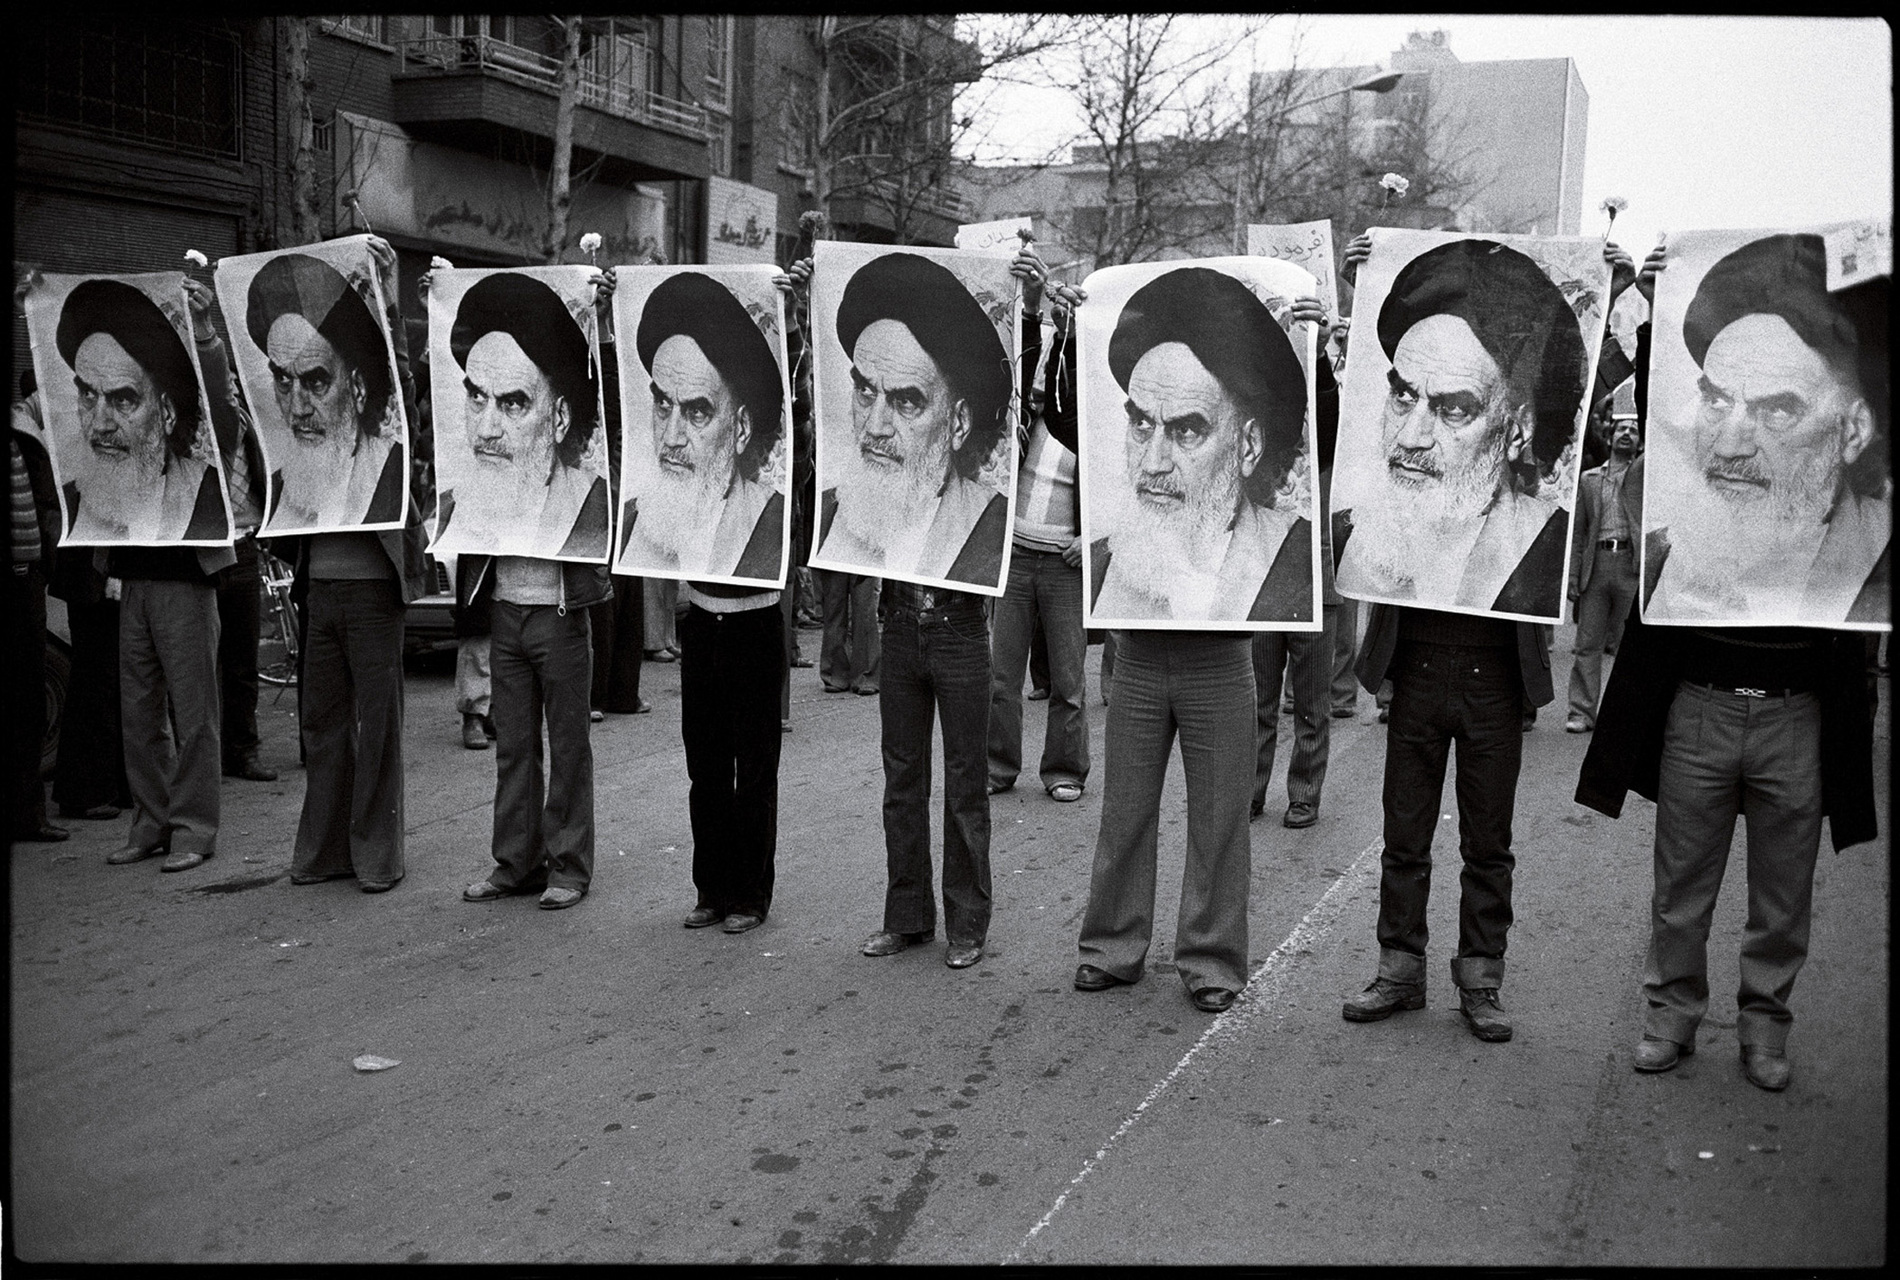 Ayatollah Khomeini posters were present at every anti-Shah rally. : 44 Days: the Iranian Revolution : David Burnett | Photographer